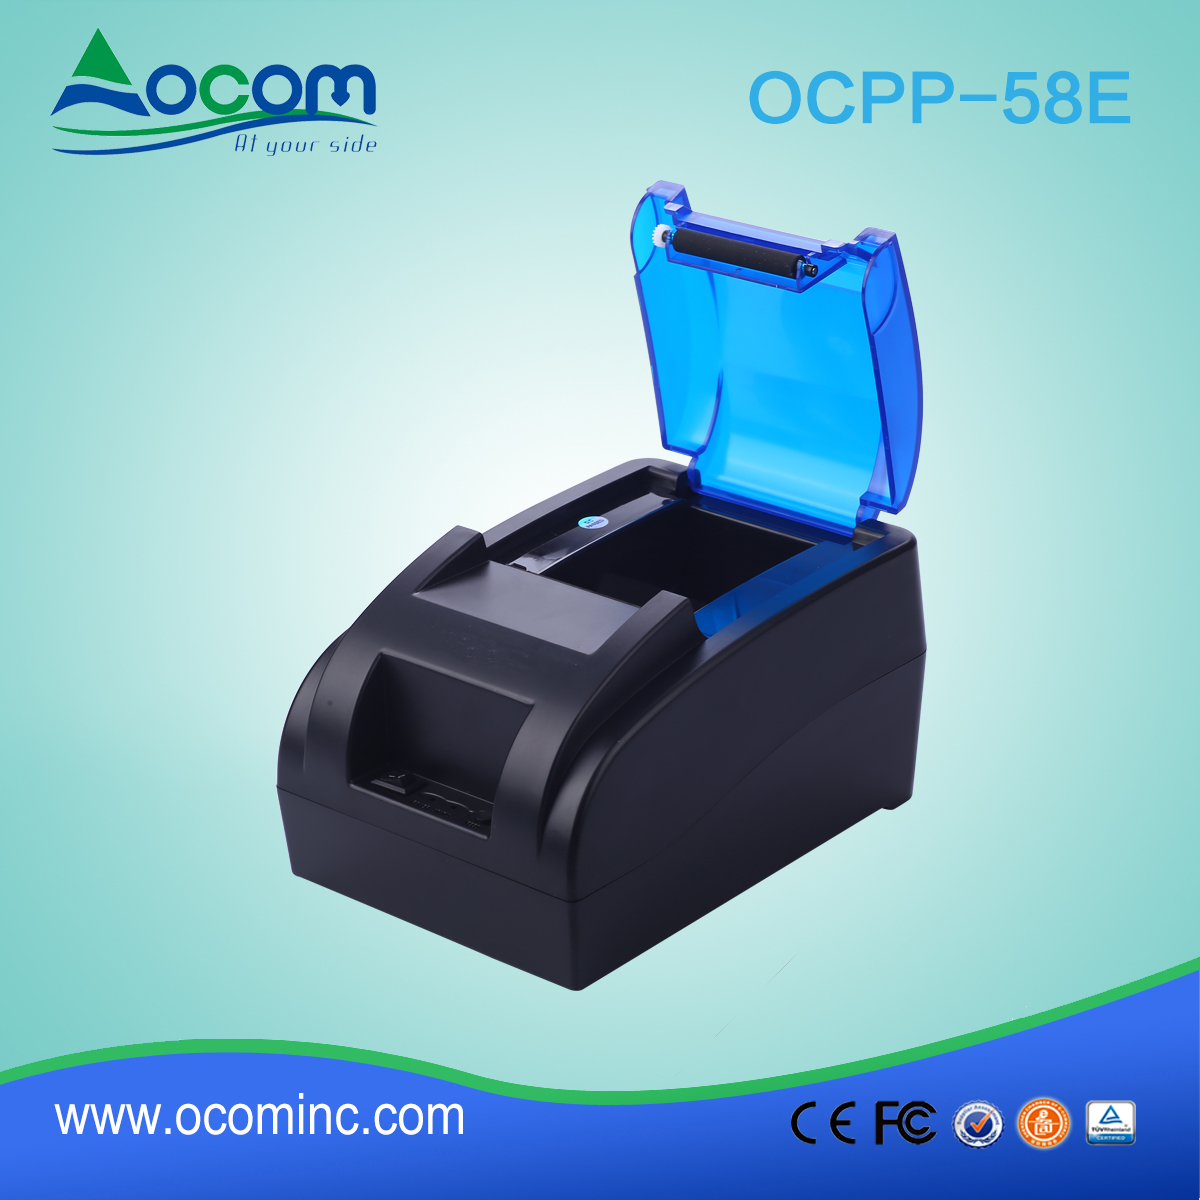 OCPP-58E--piccola stampante termica da 58 millimetri pos